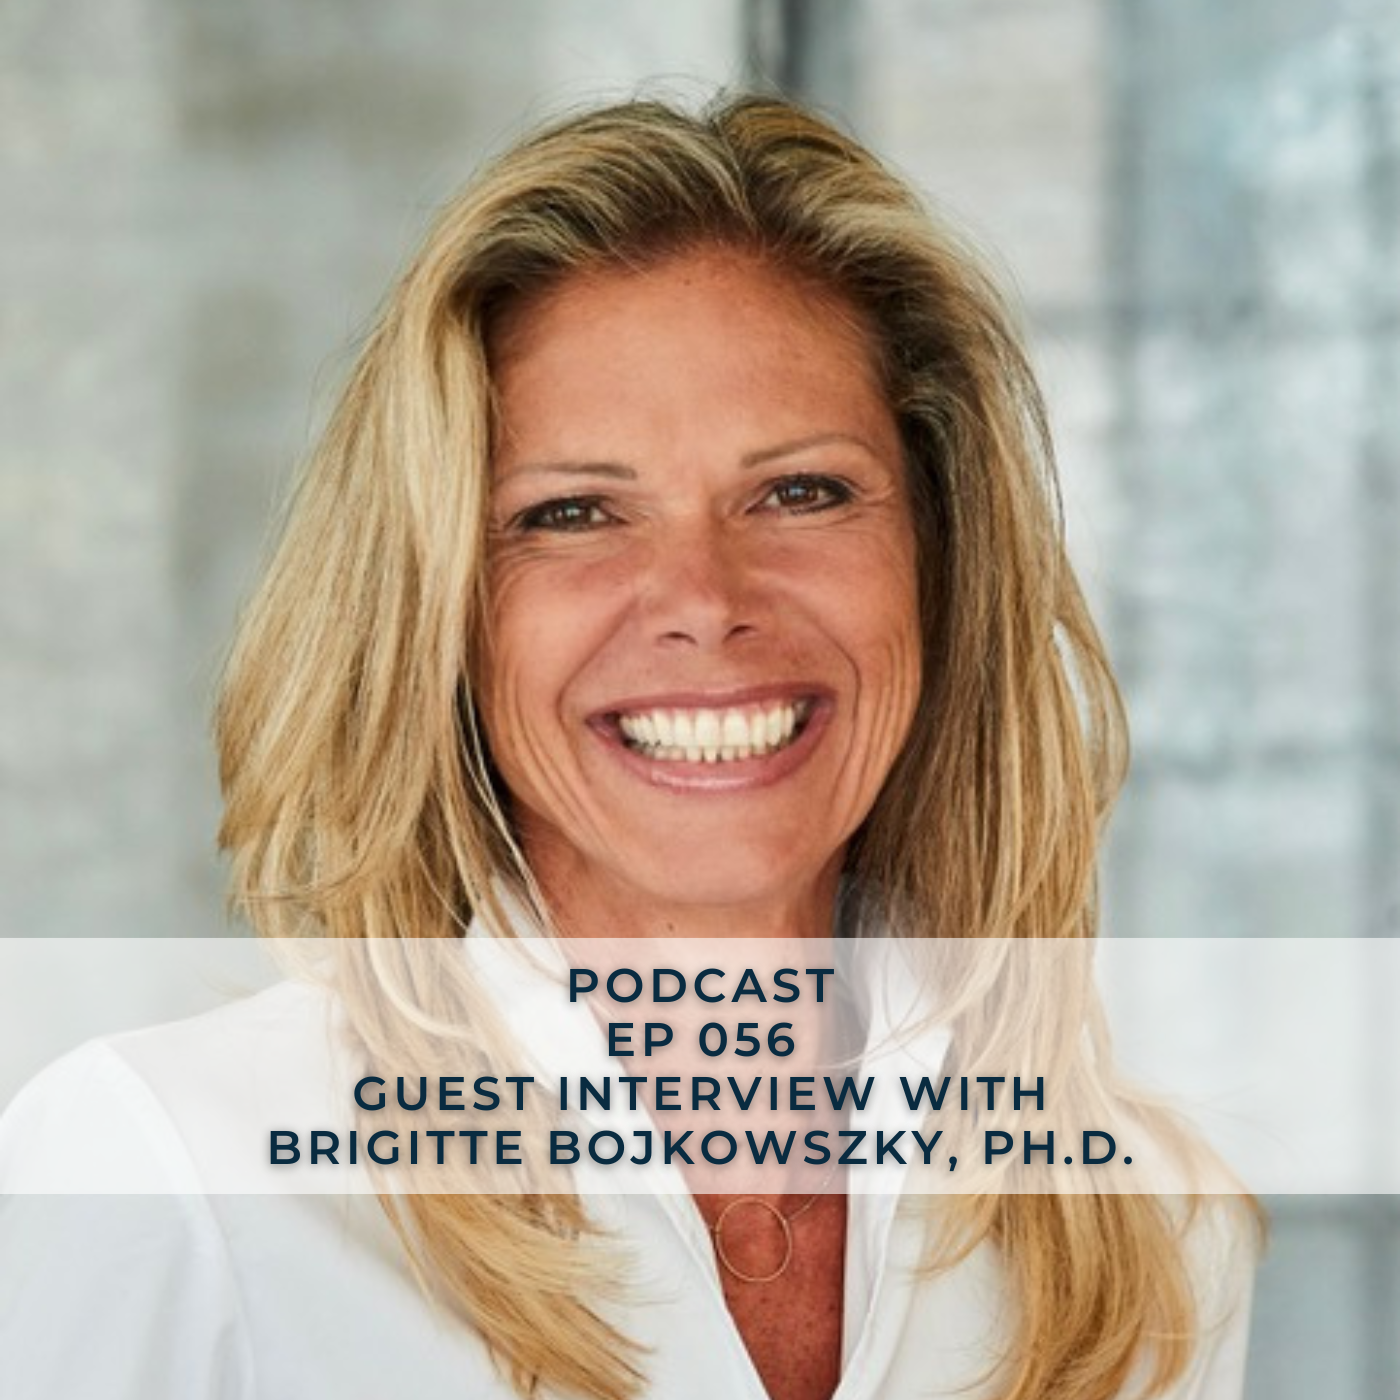 Guest Interview with Brigitte Bojkowszky, Ph.D.